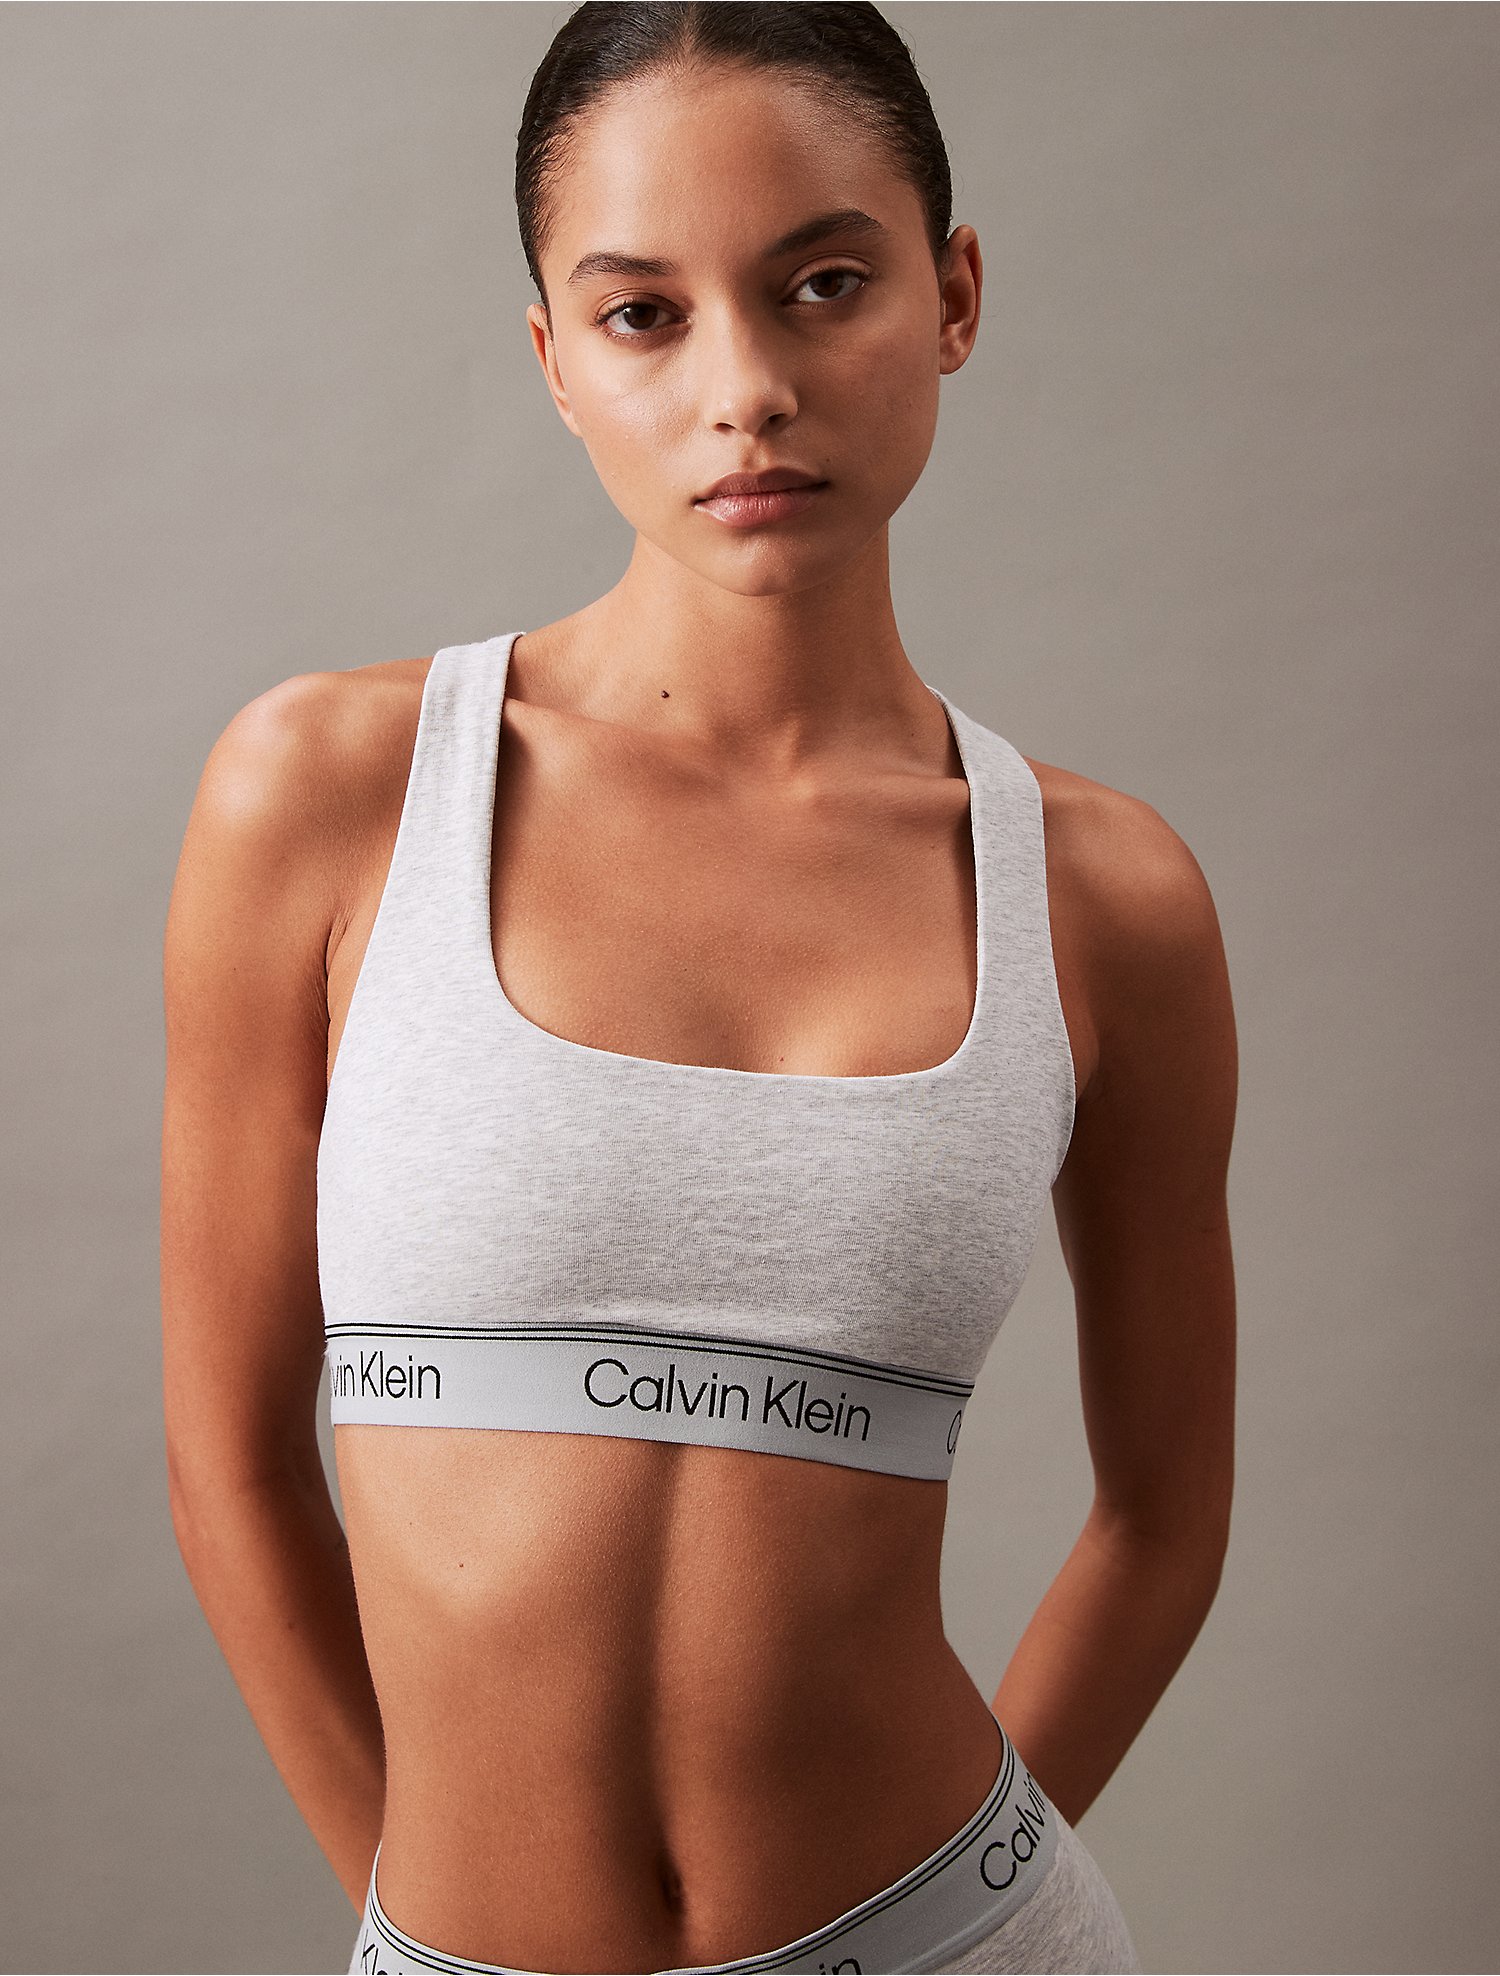 erts Jeugd cursief Calvin Klein Athletic Unlined Bralette | Calvin Klein